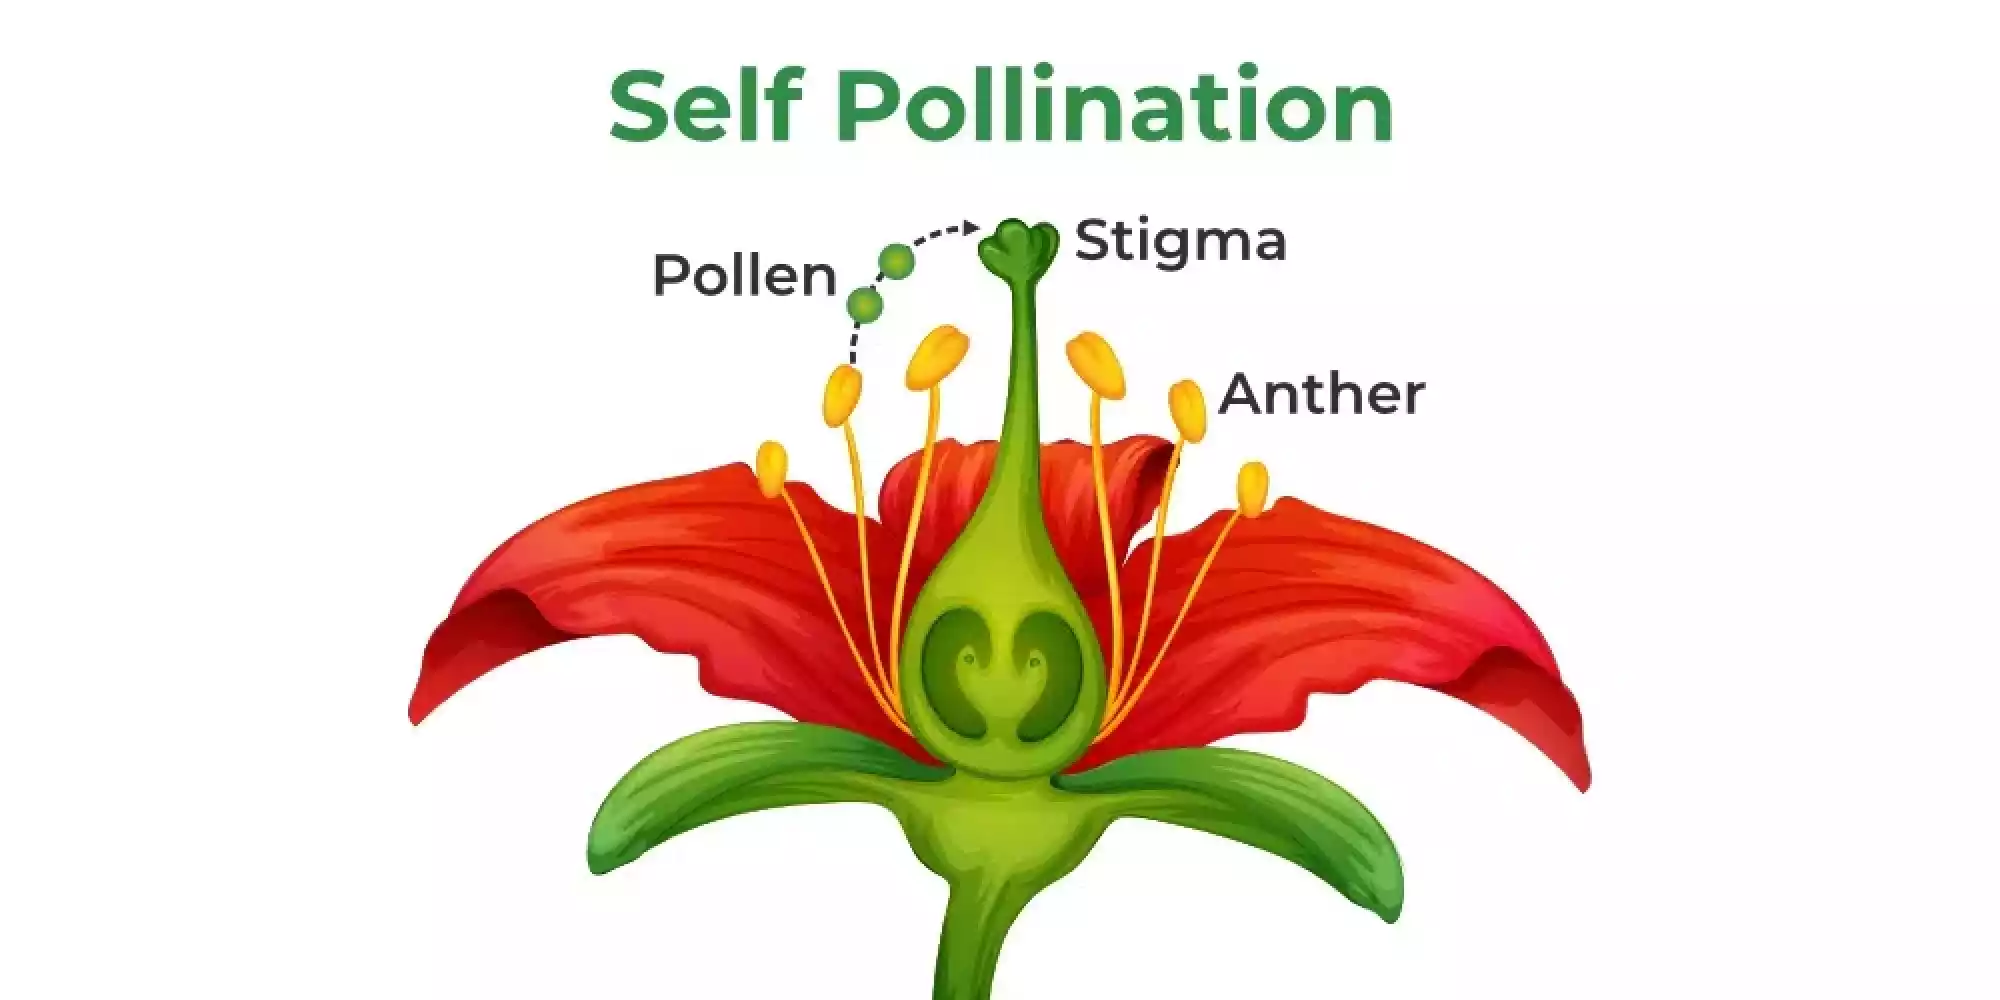 Self Pollination